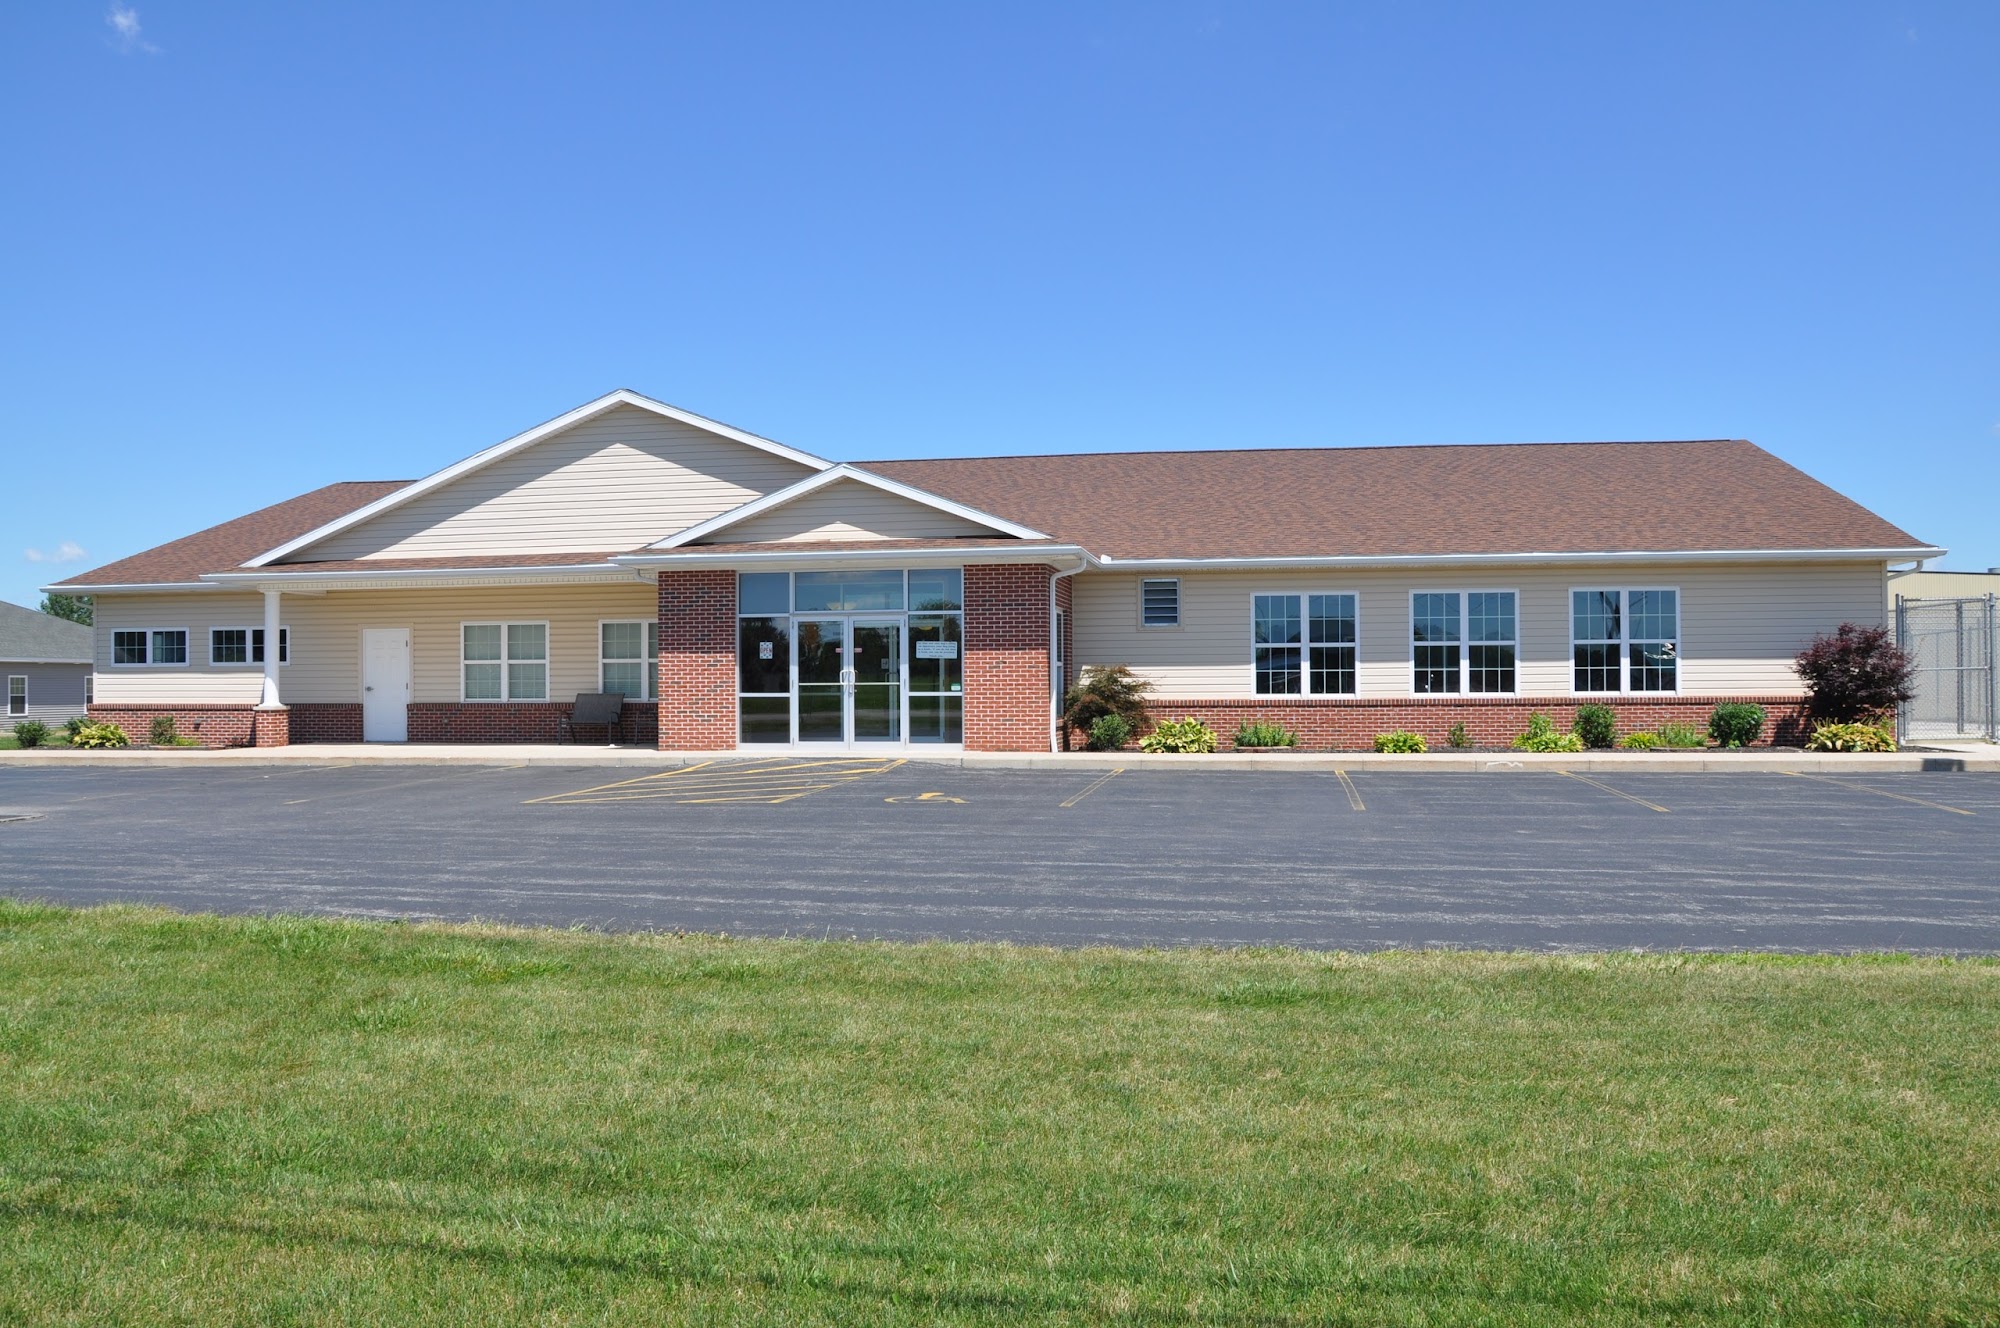 Bluffton Veterinary Hospital & Pet Care Center 70 OH-103, Bluffton Ohio 45817